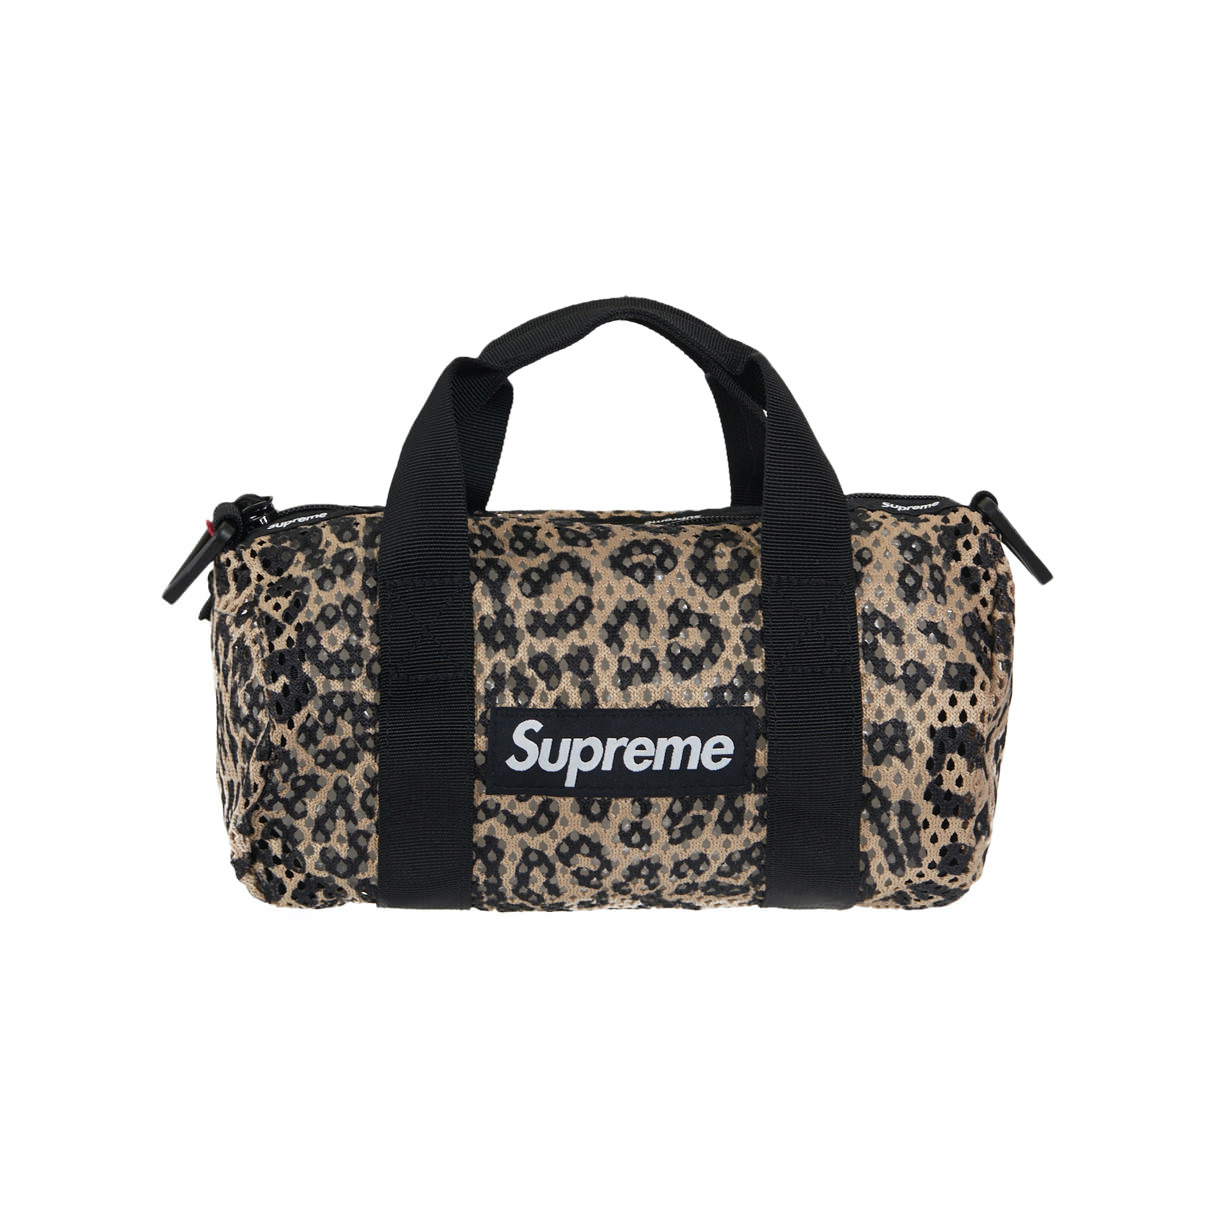 Supreme Supreme Duffle Bag (FW18) Purple